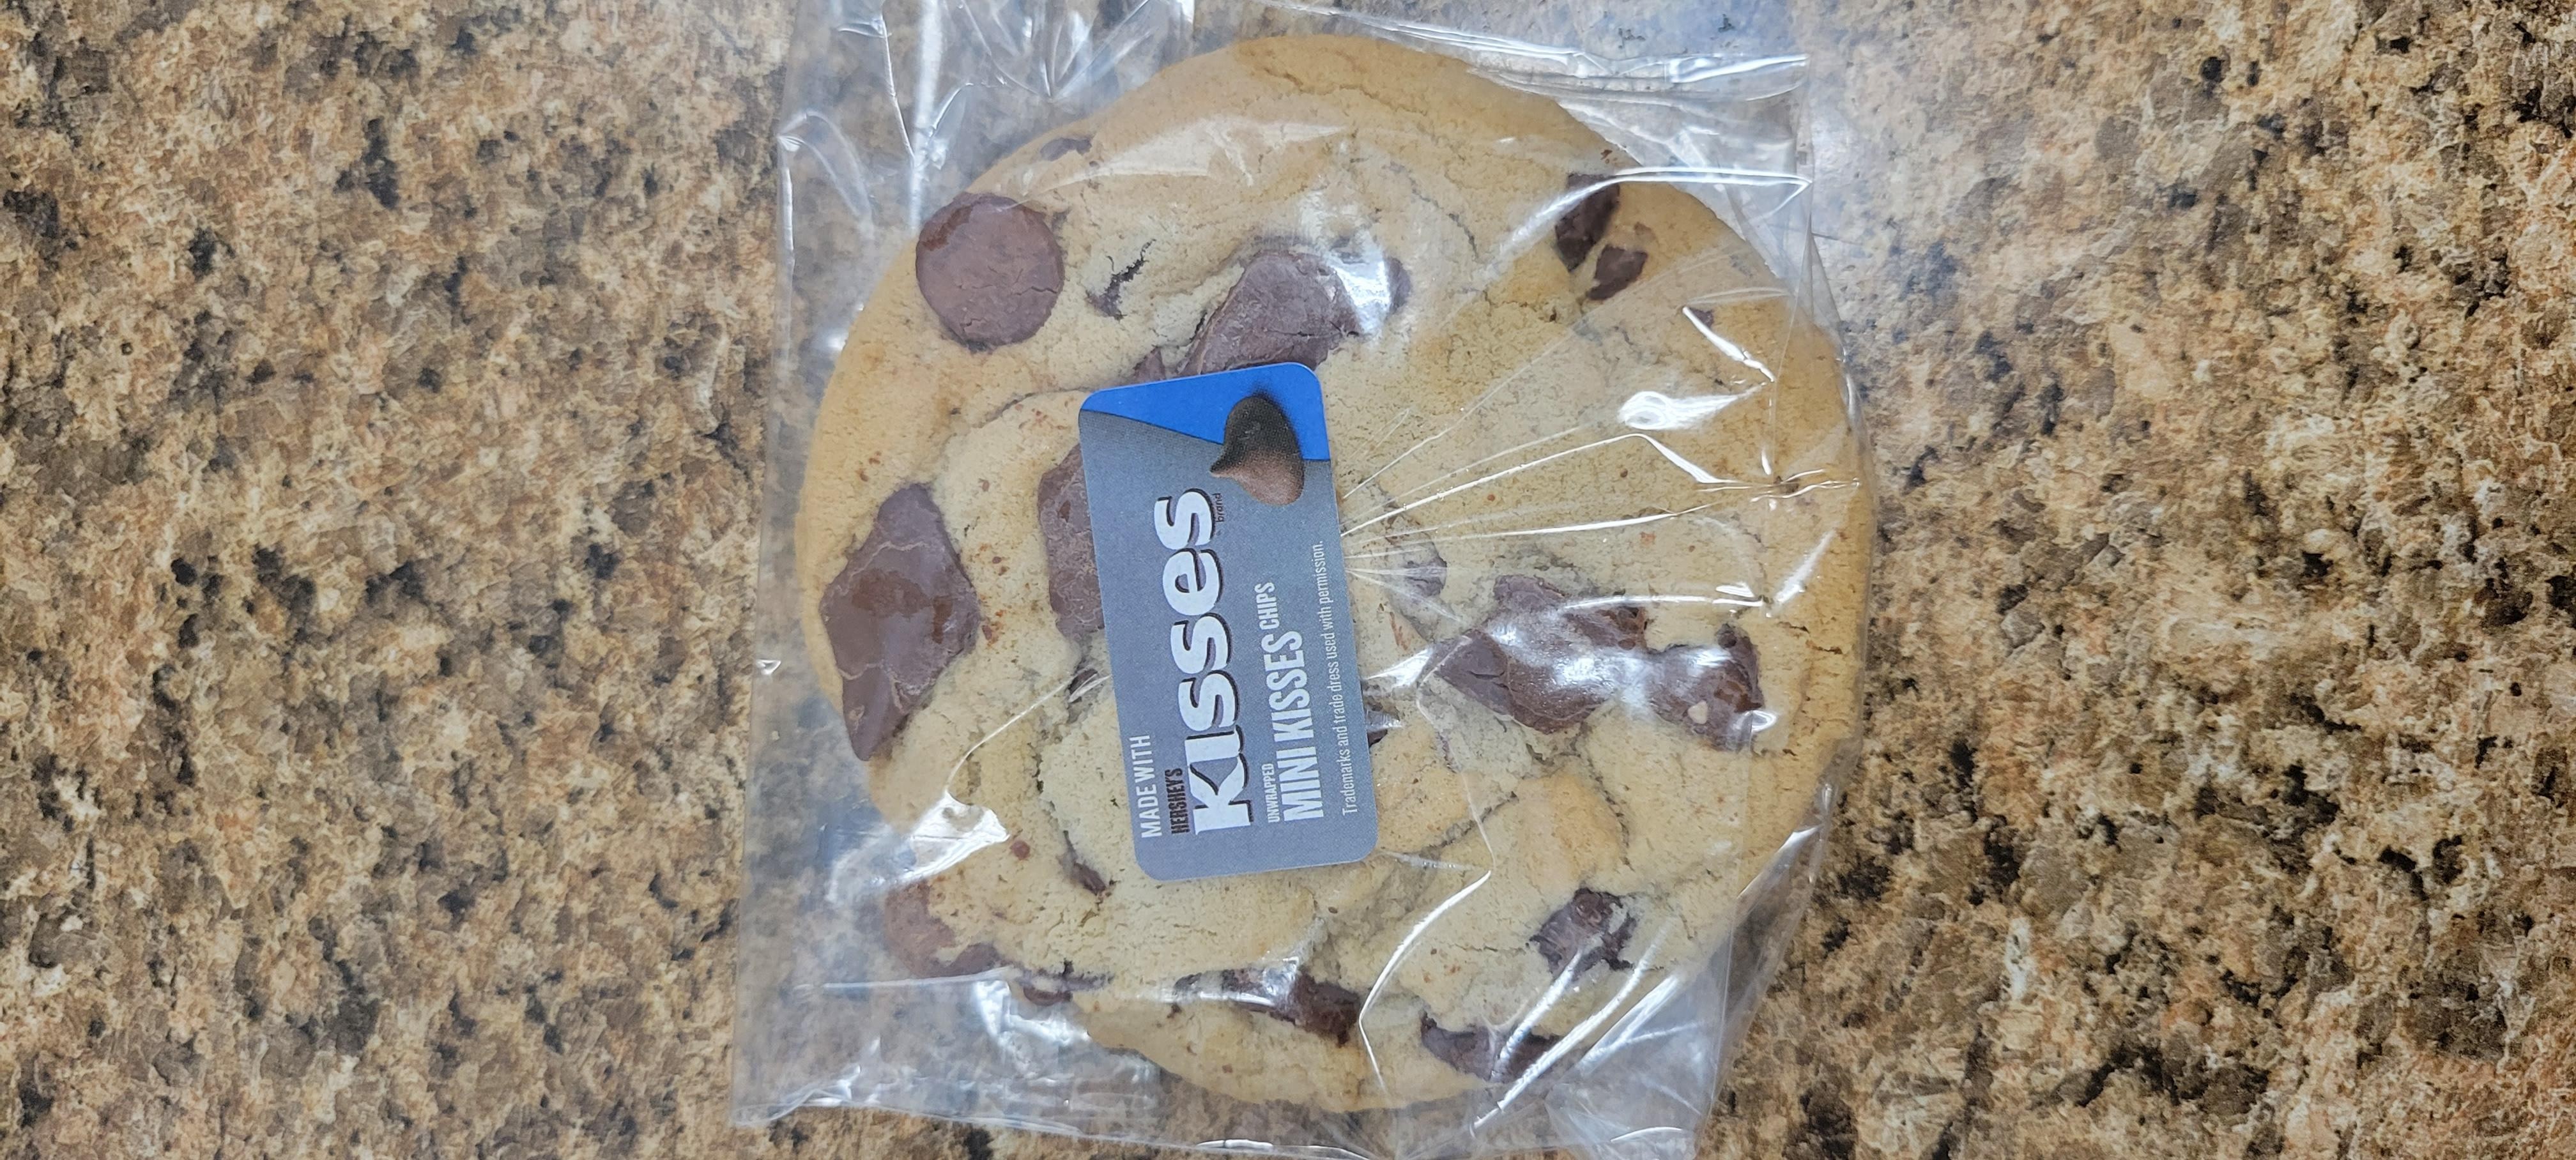 Triple Hershey's Chocolate the Cookie Monster